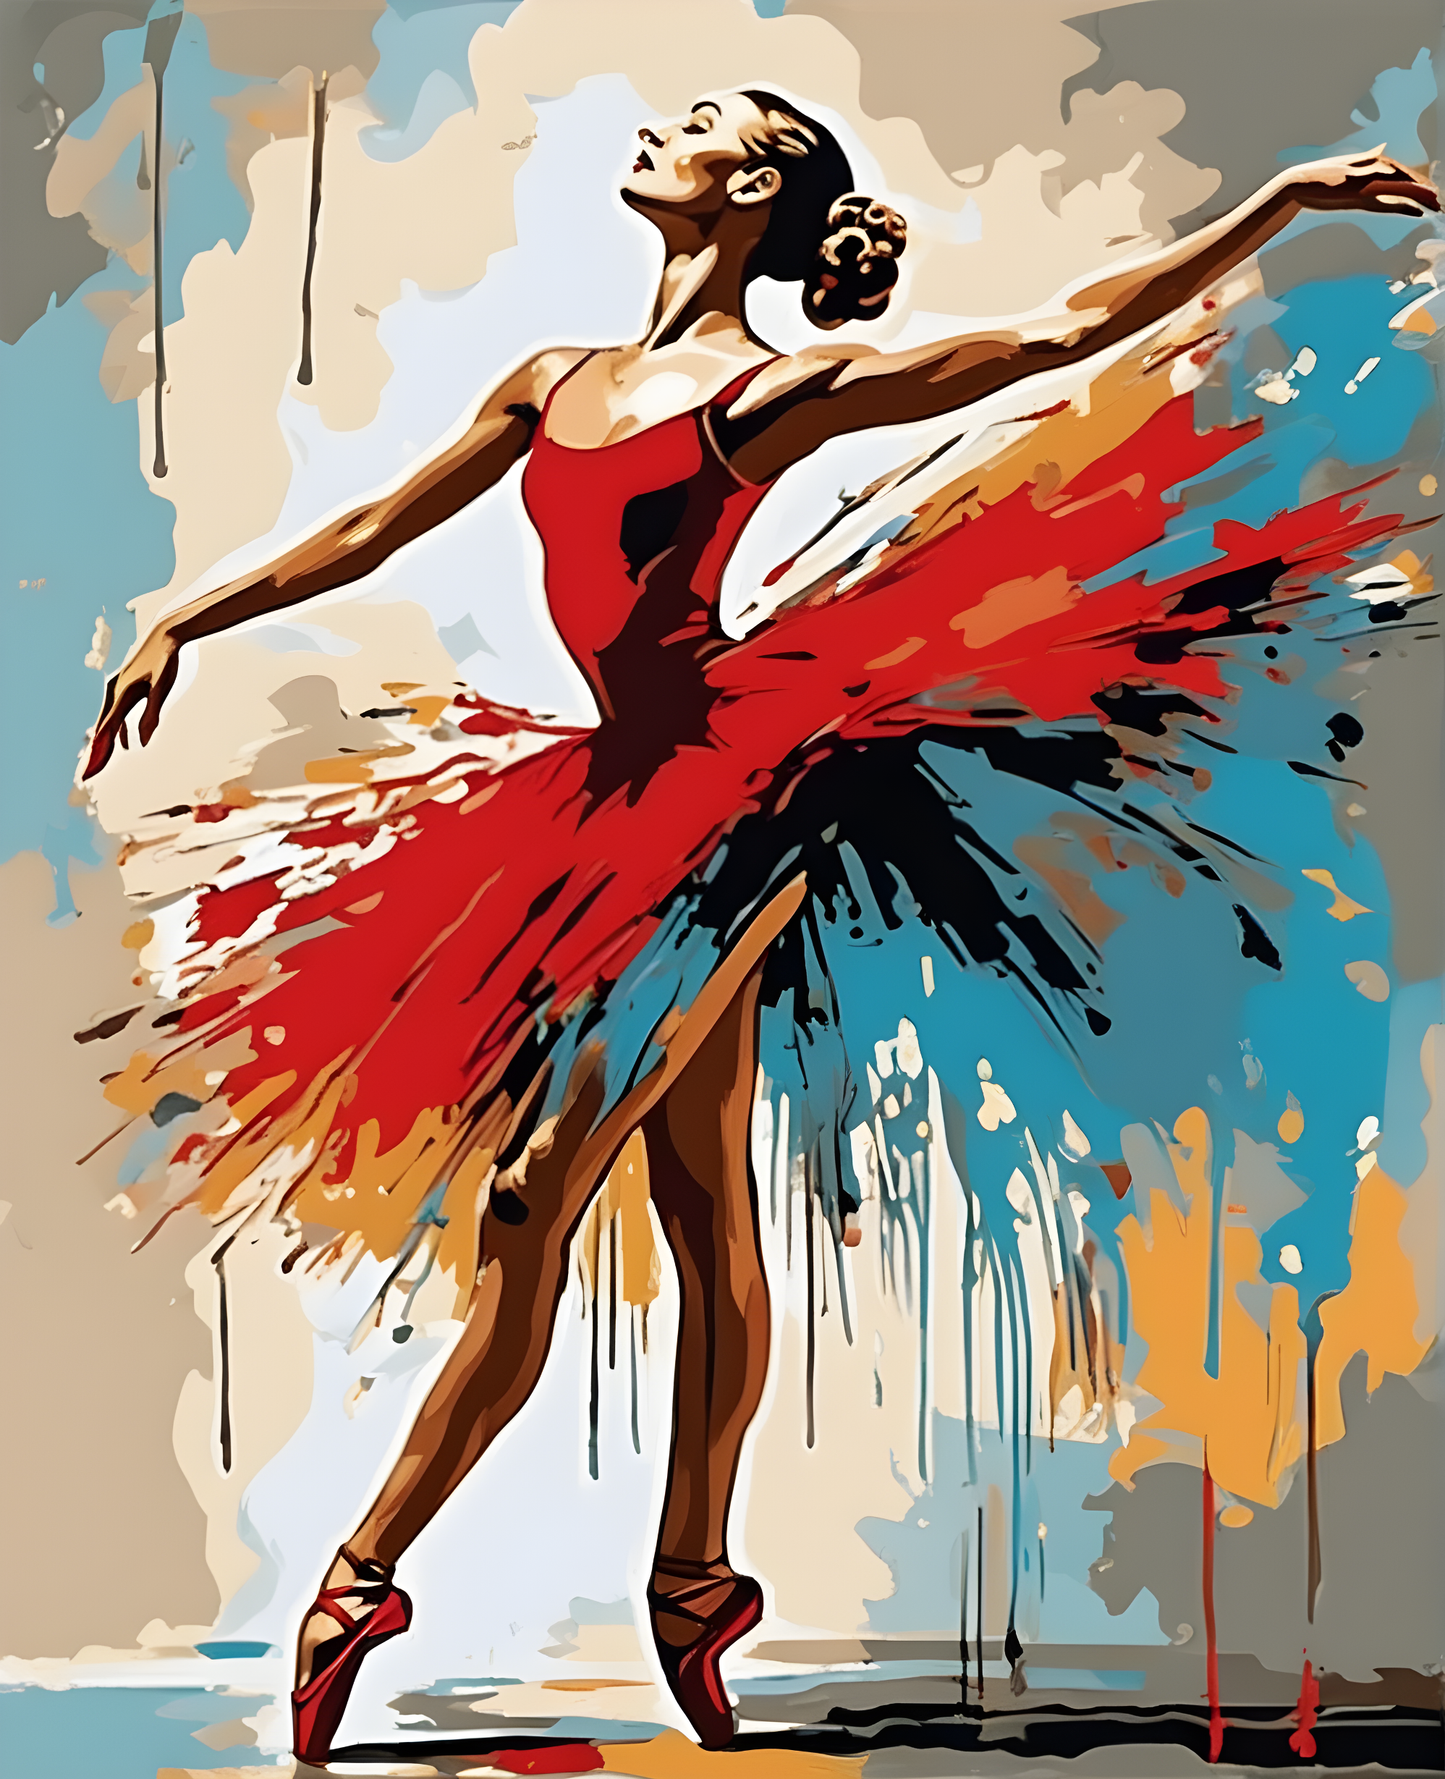 Red Ballerina (2) - Van-Go Paint-By-Number Kit